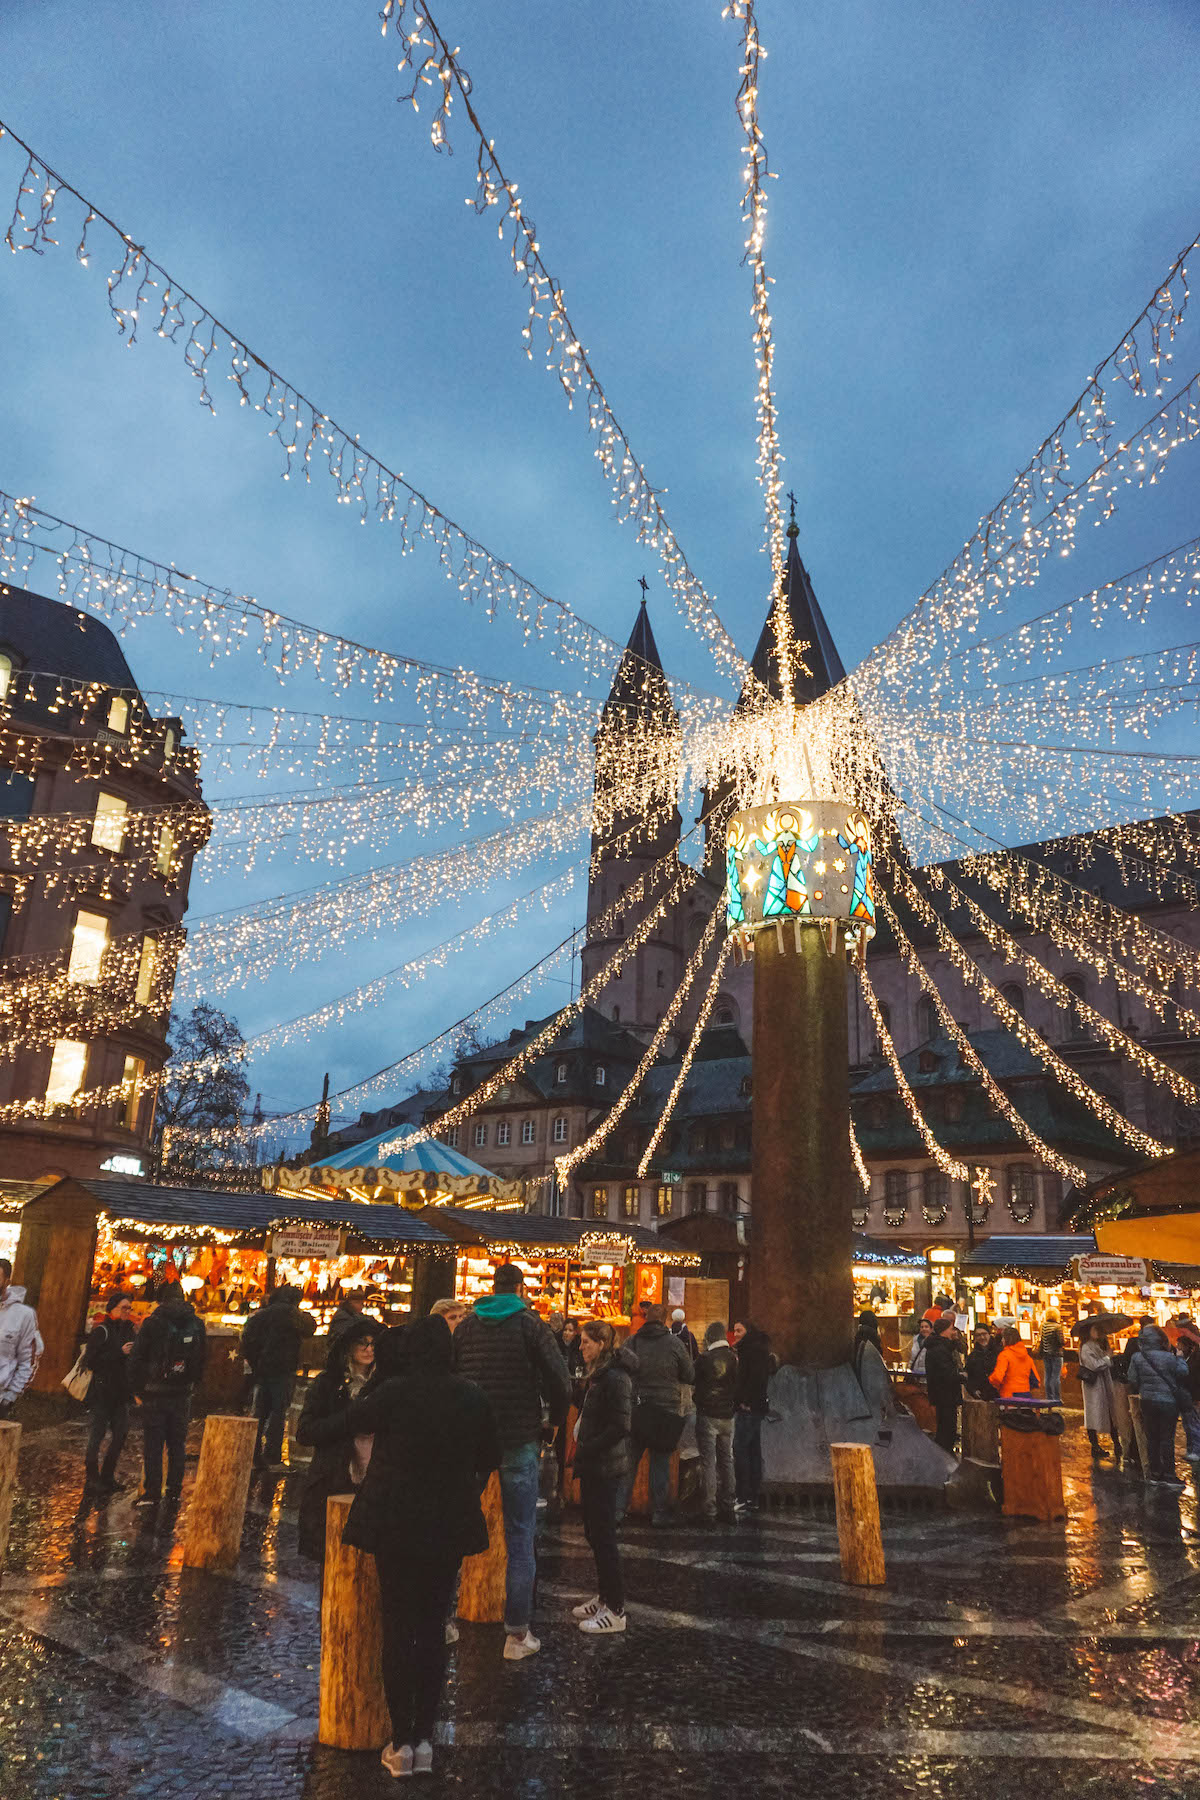 Mainz Christmas market lights at night